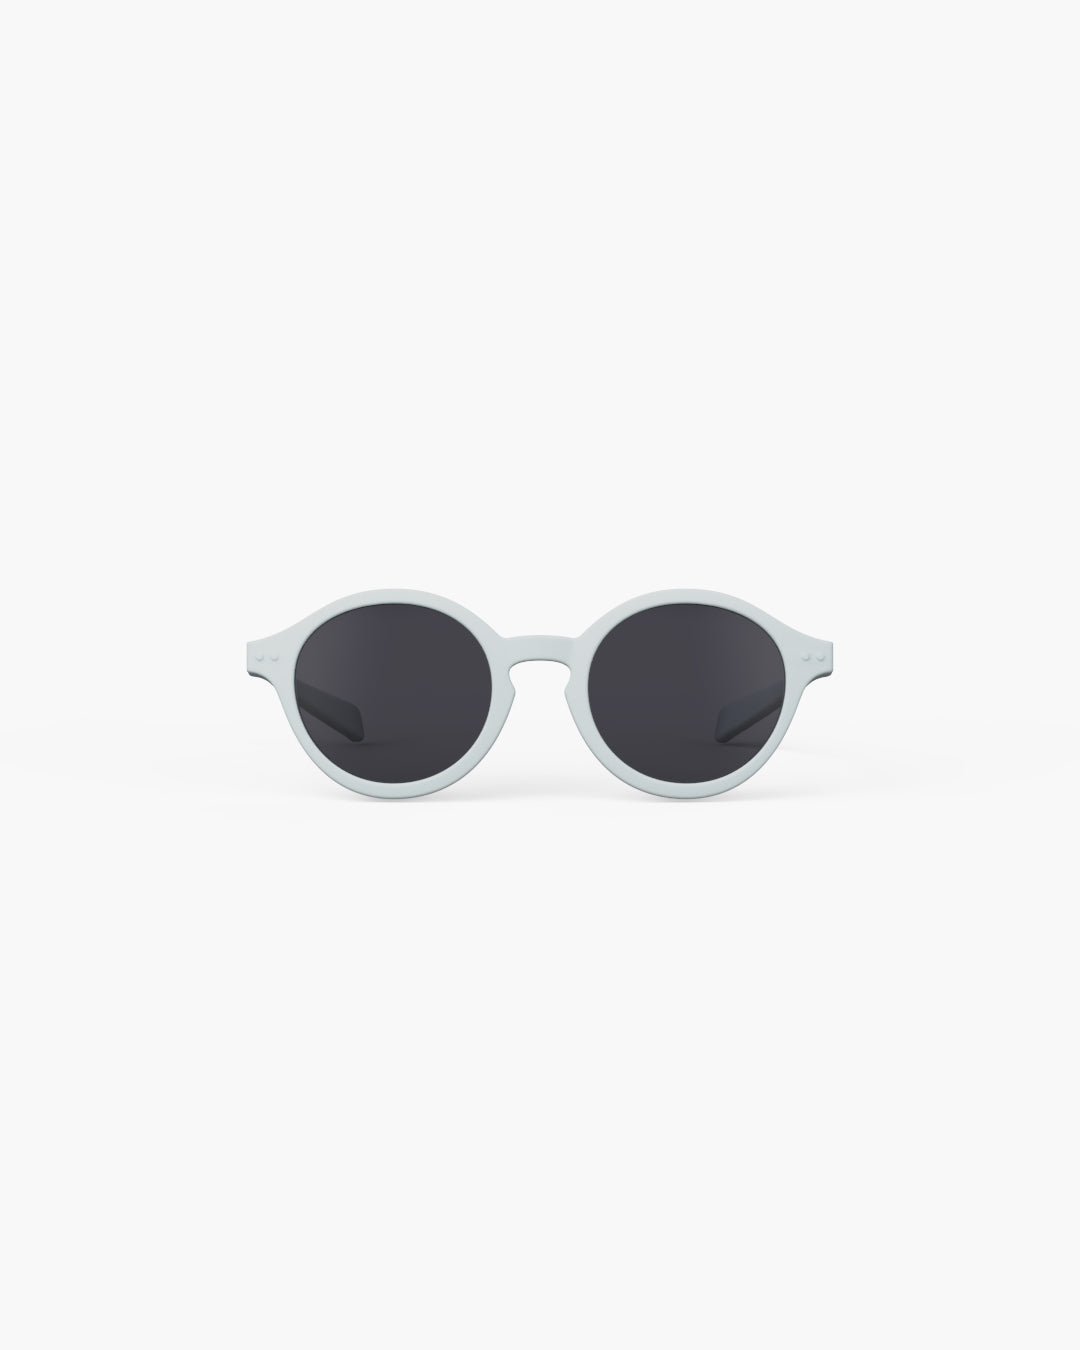 Izipizi Kids Sunglasses | 4 Colours Available